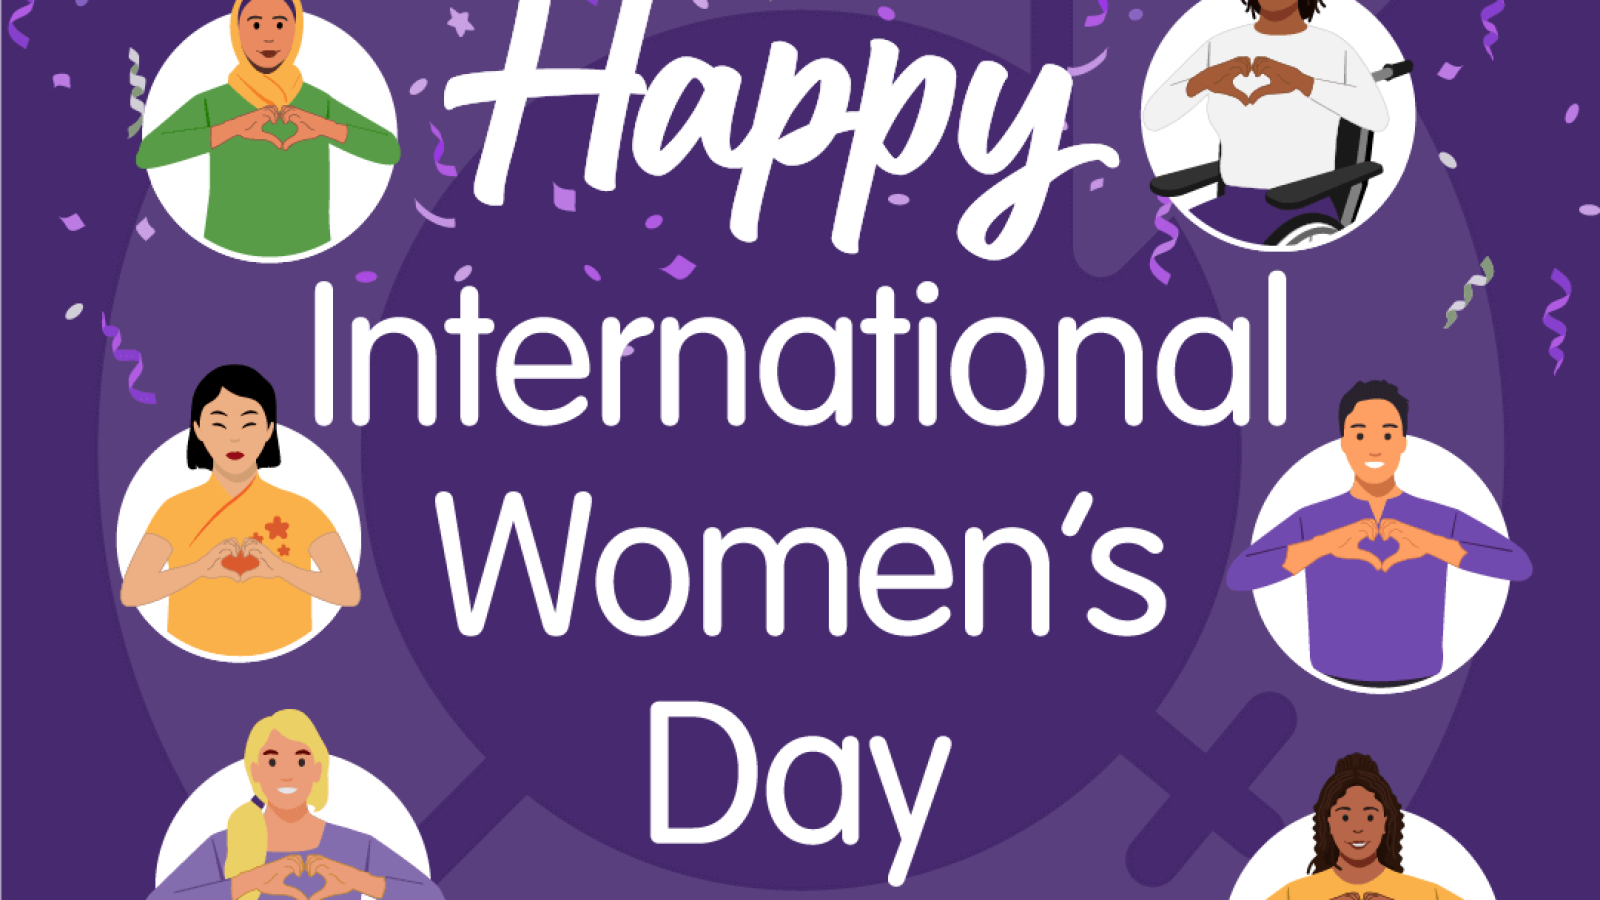 Reads Happy International Women's Day #inspireinclusion